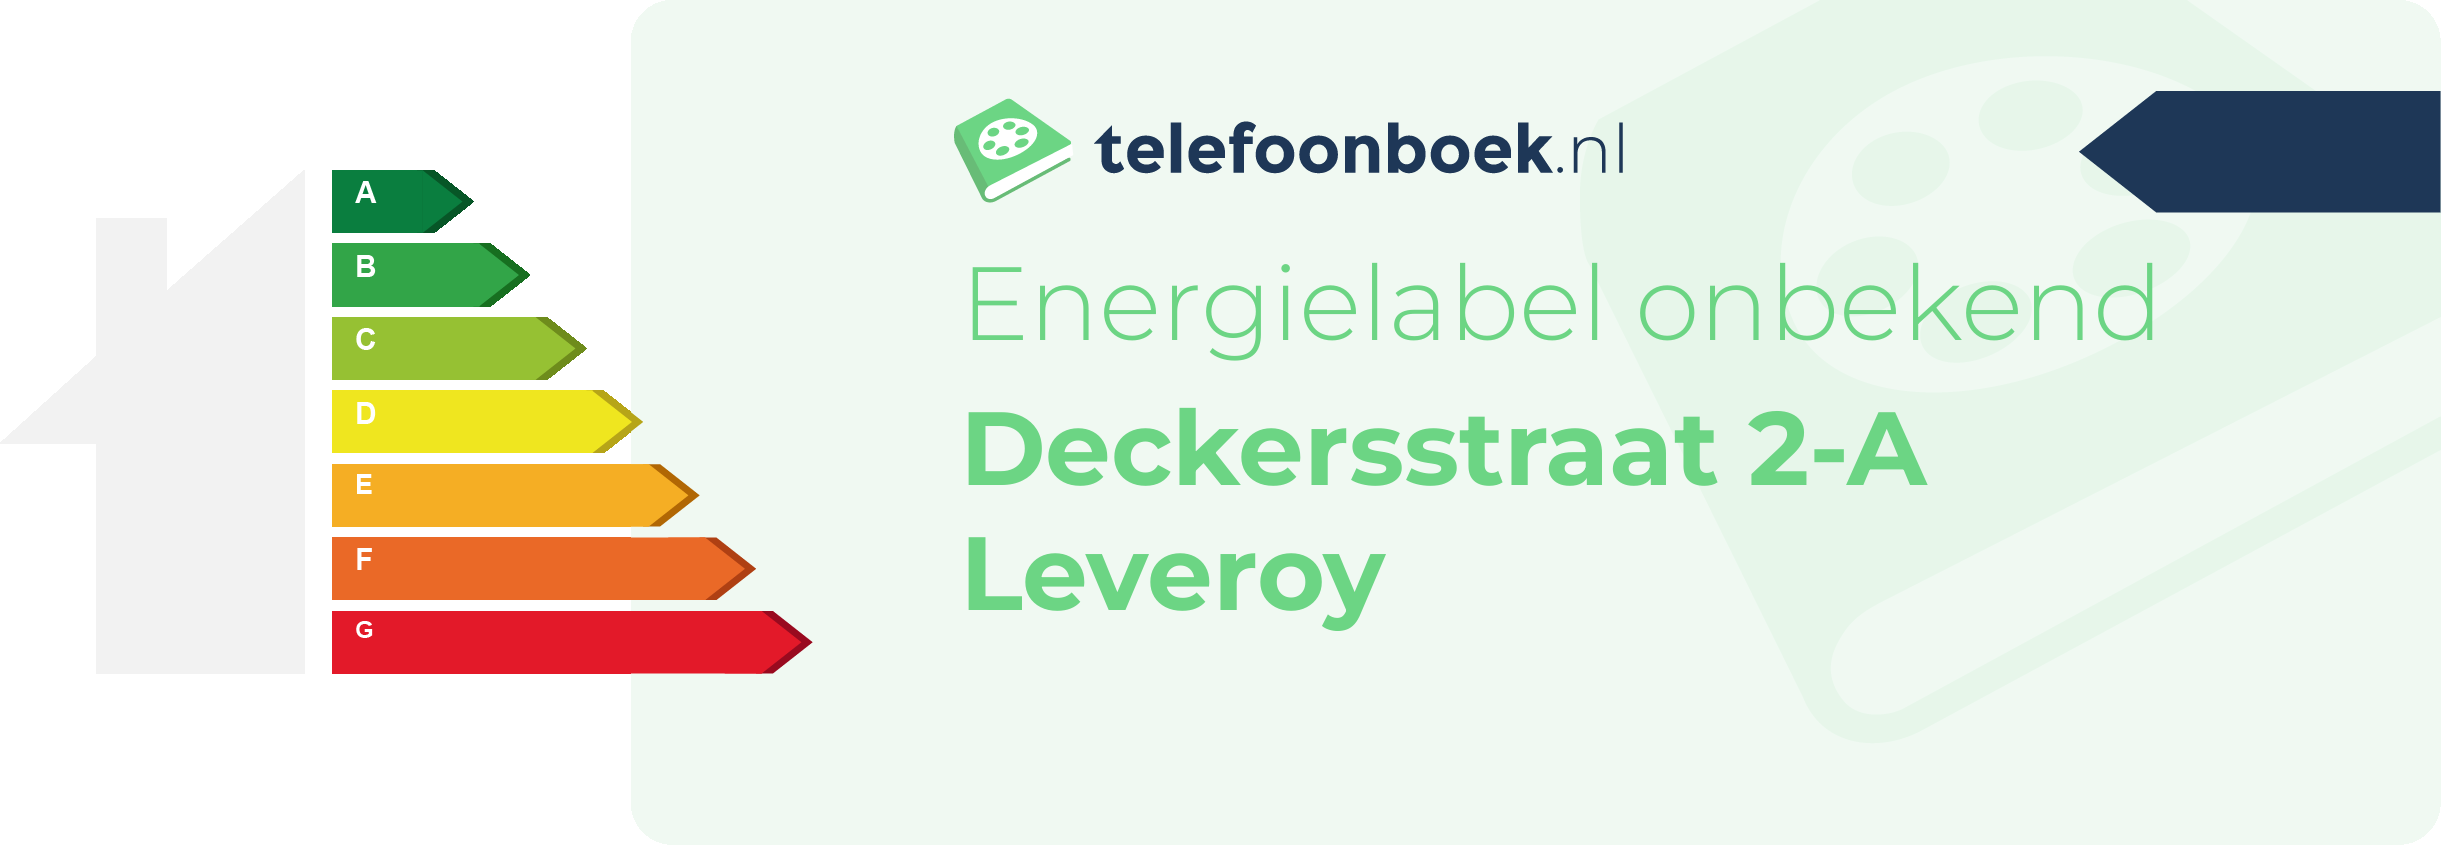 Energielabel Deckersstraat 2-A Leveroy